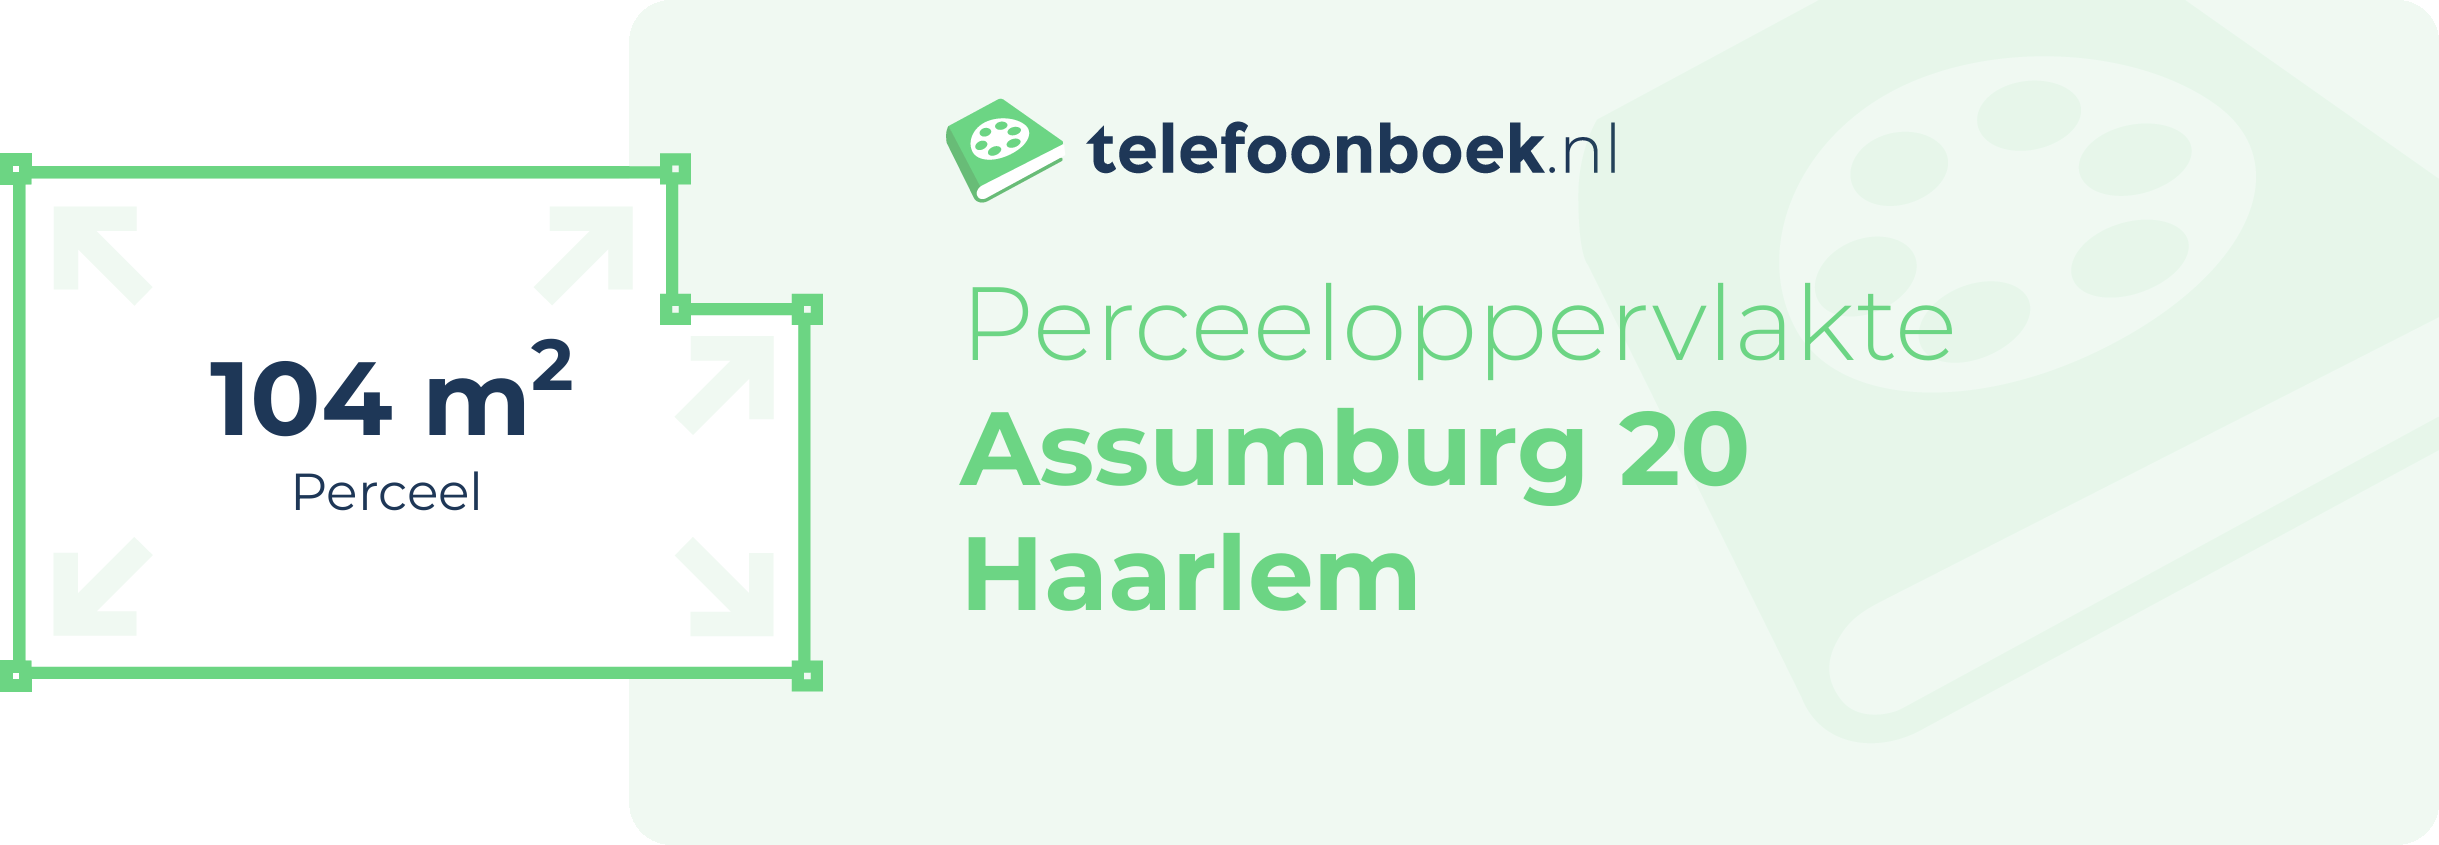 Perceeloppervlakte Assumburg 20 Haarlem